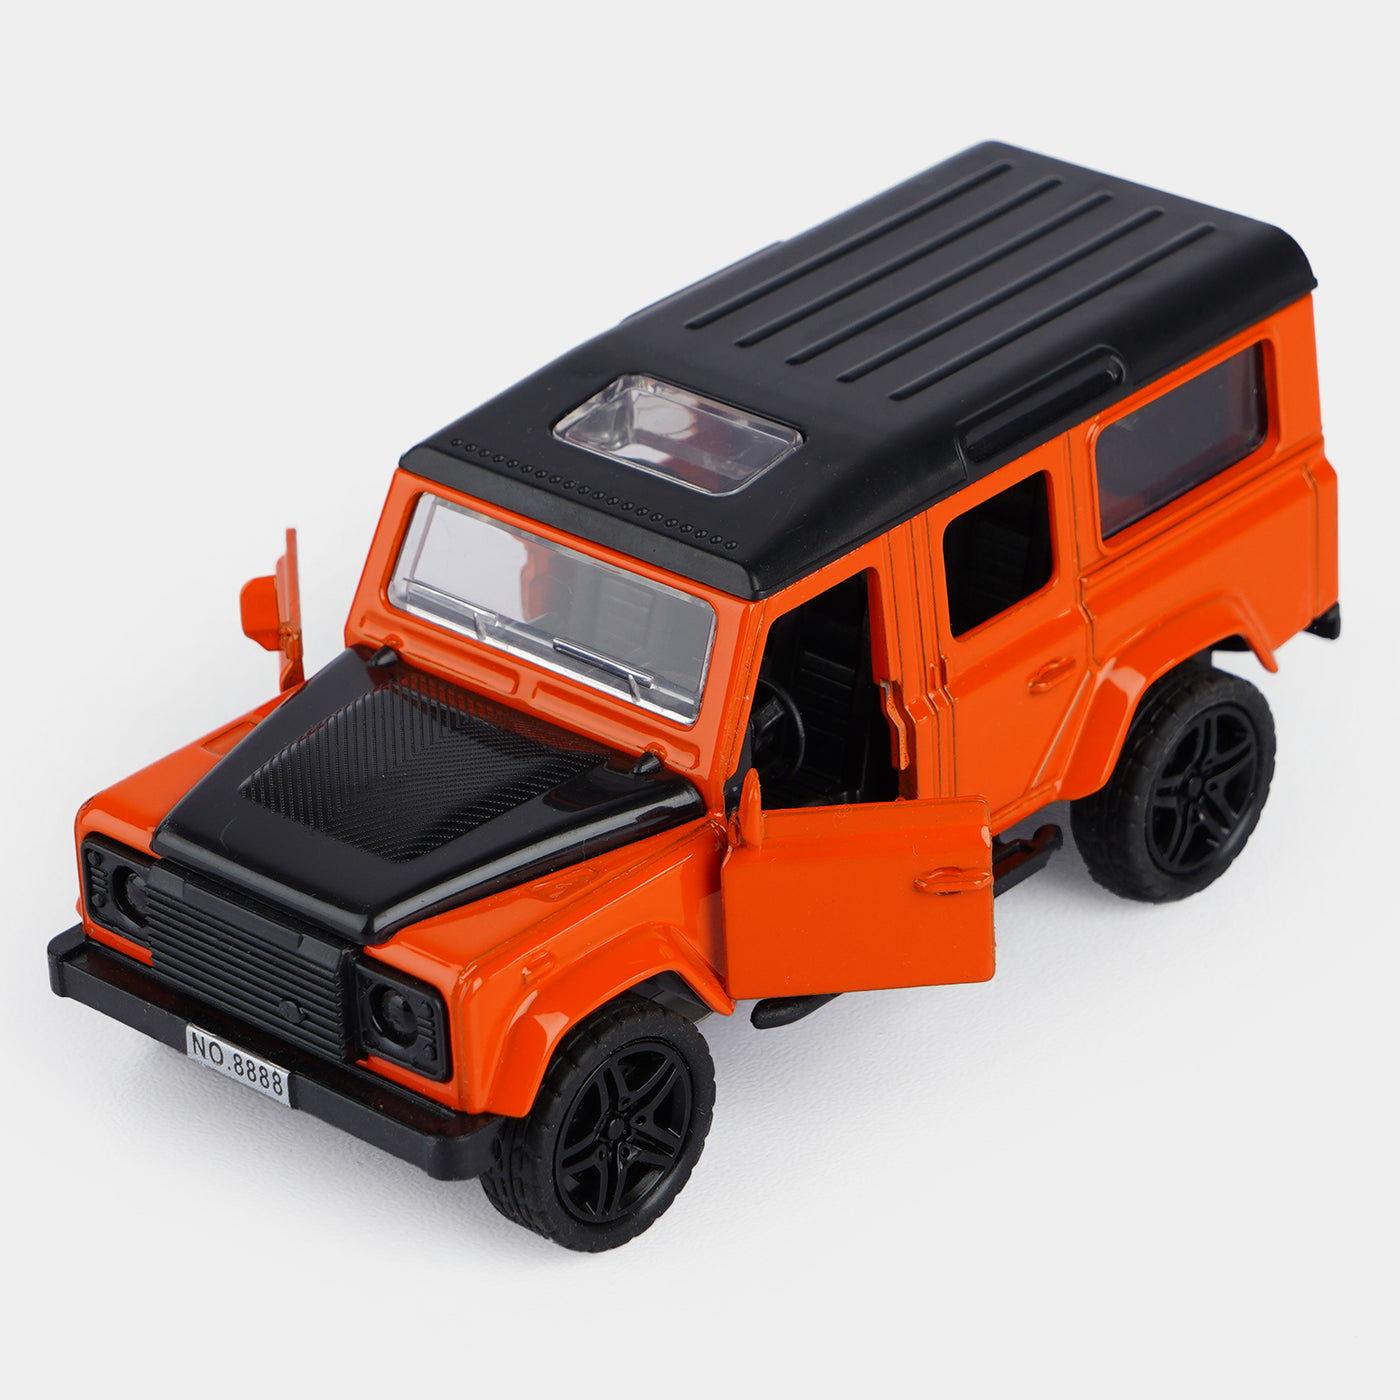 Die-Cast Model Car For Kids